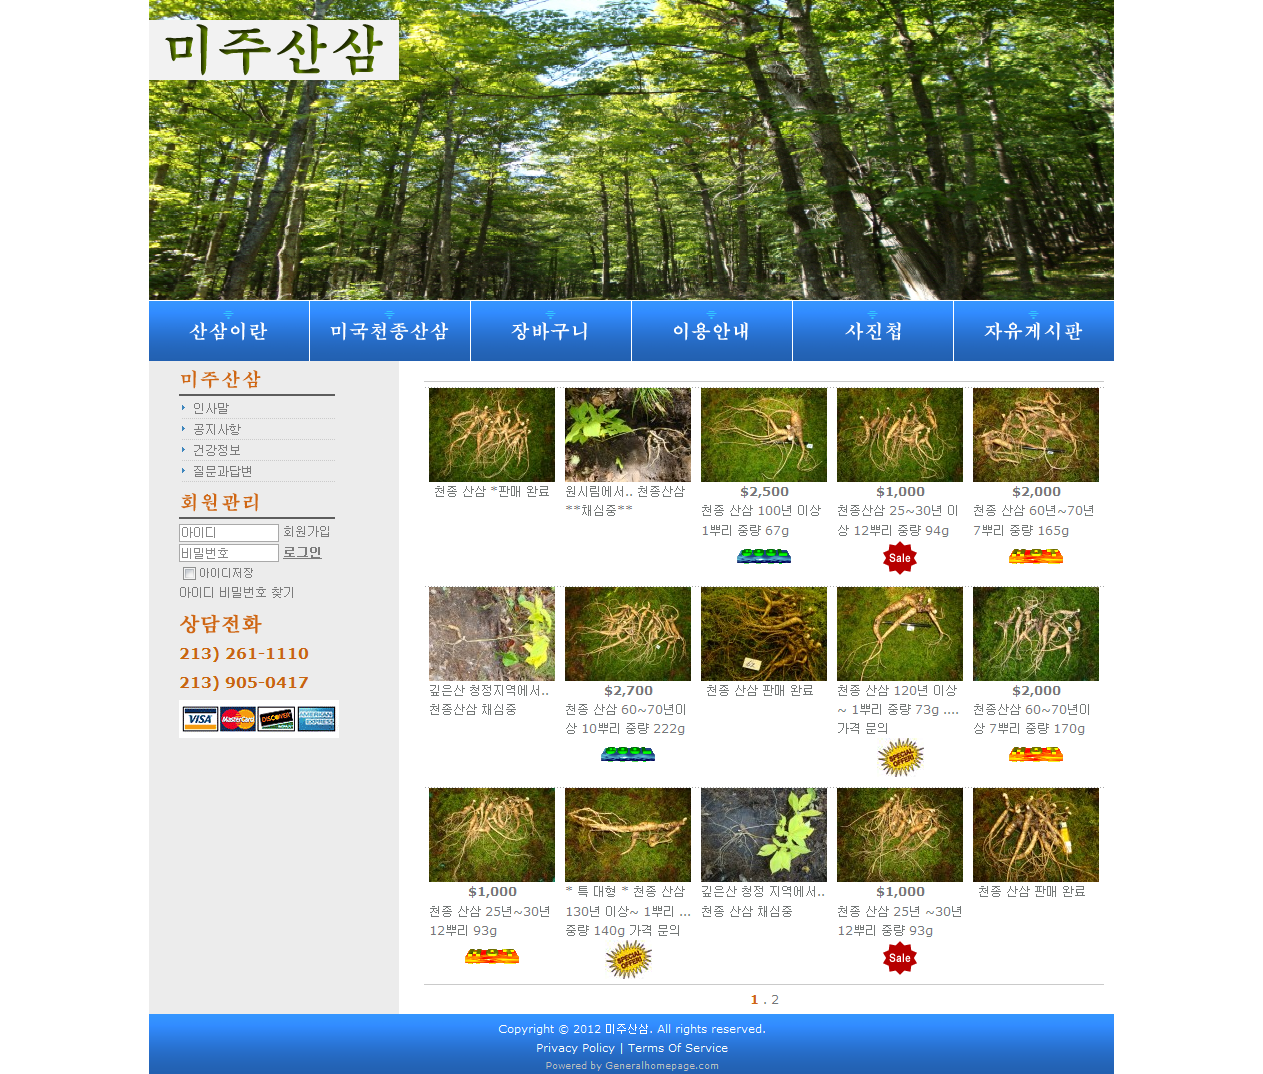 FireShot Screen Capture #178 - '미주산삼' - mijuss_bkserver3_com_web_shopping_main_php_act=list&rc=&pc=0&mc=0&lc=&sid=&mid=.png